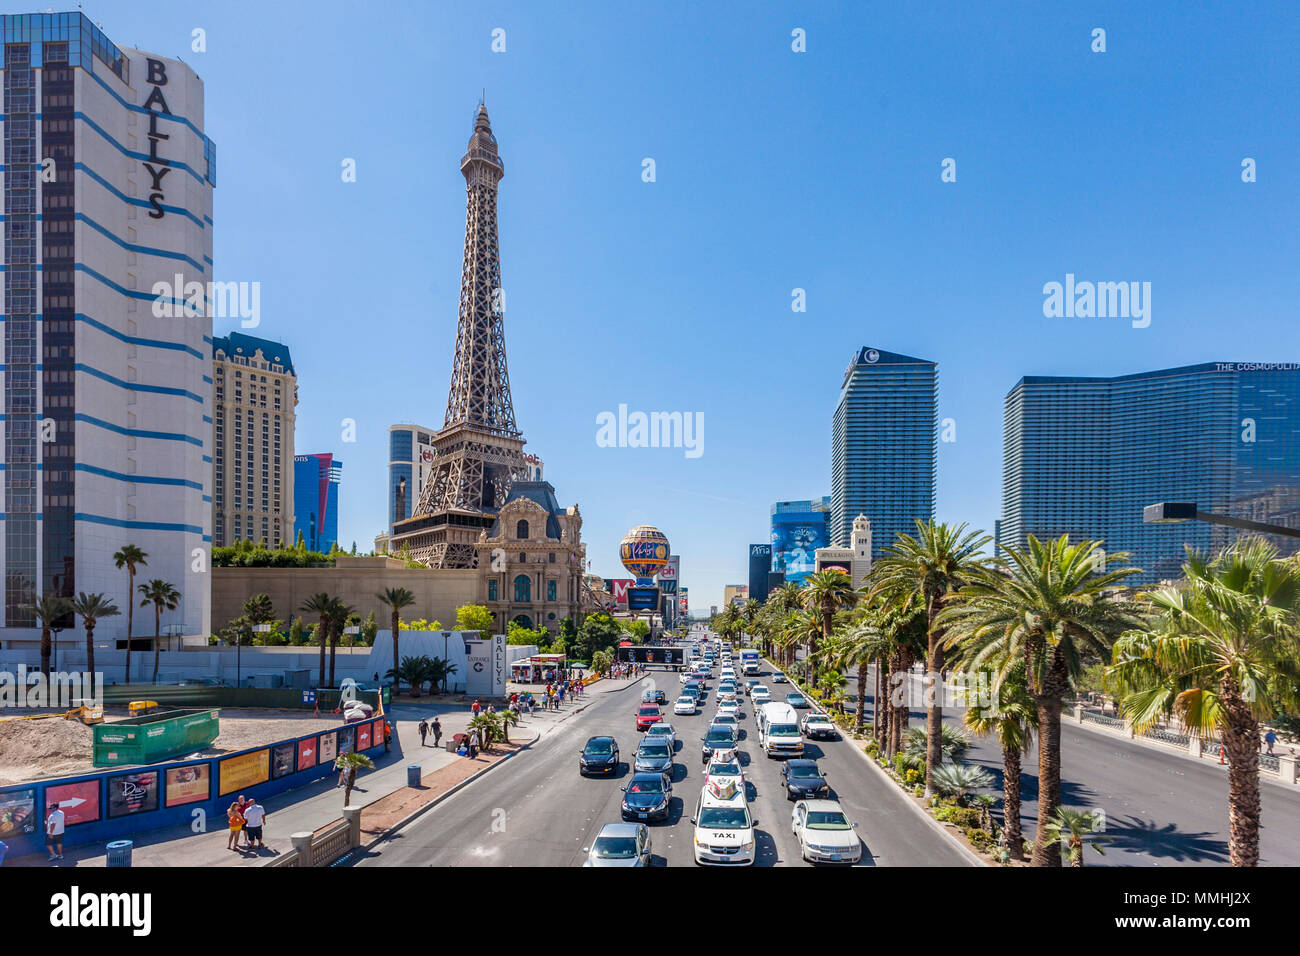 Der Verkehr passiert die Nachbildung des Eiffelturms im Paris Las Vegas Hotel and Casino am Las Vegas Boulevard am Las Vegas Strip in Paradise, Nevada Stockfoto